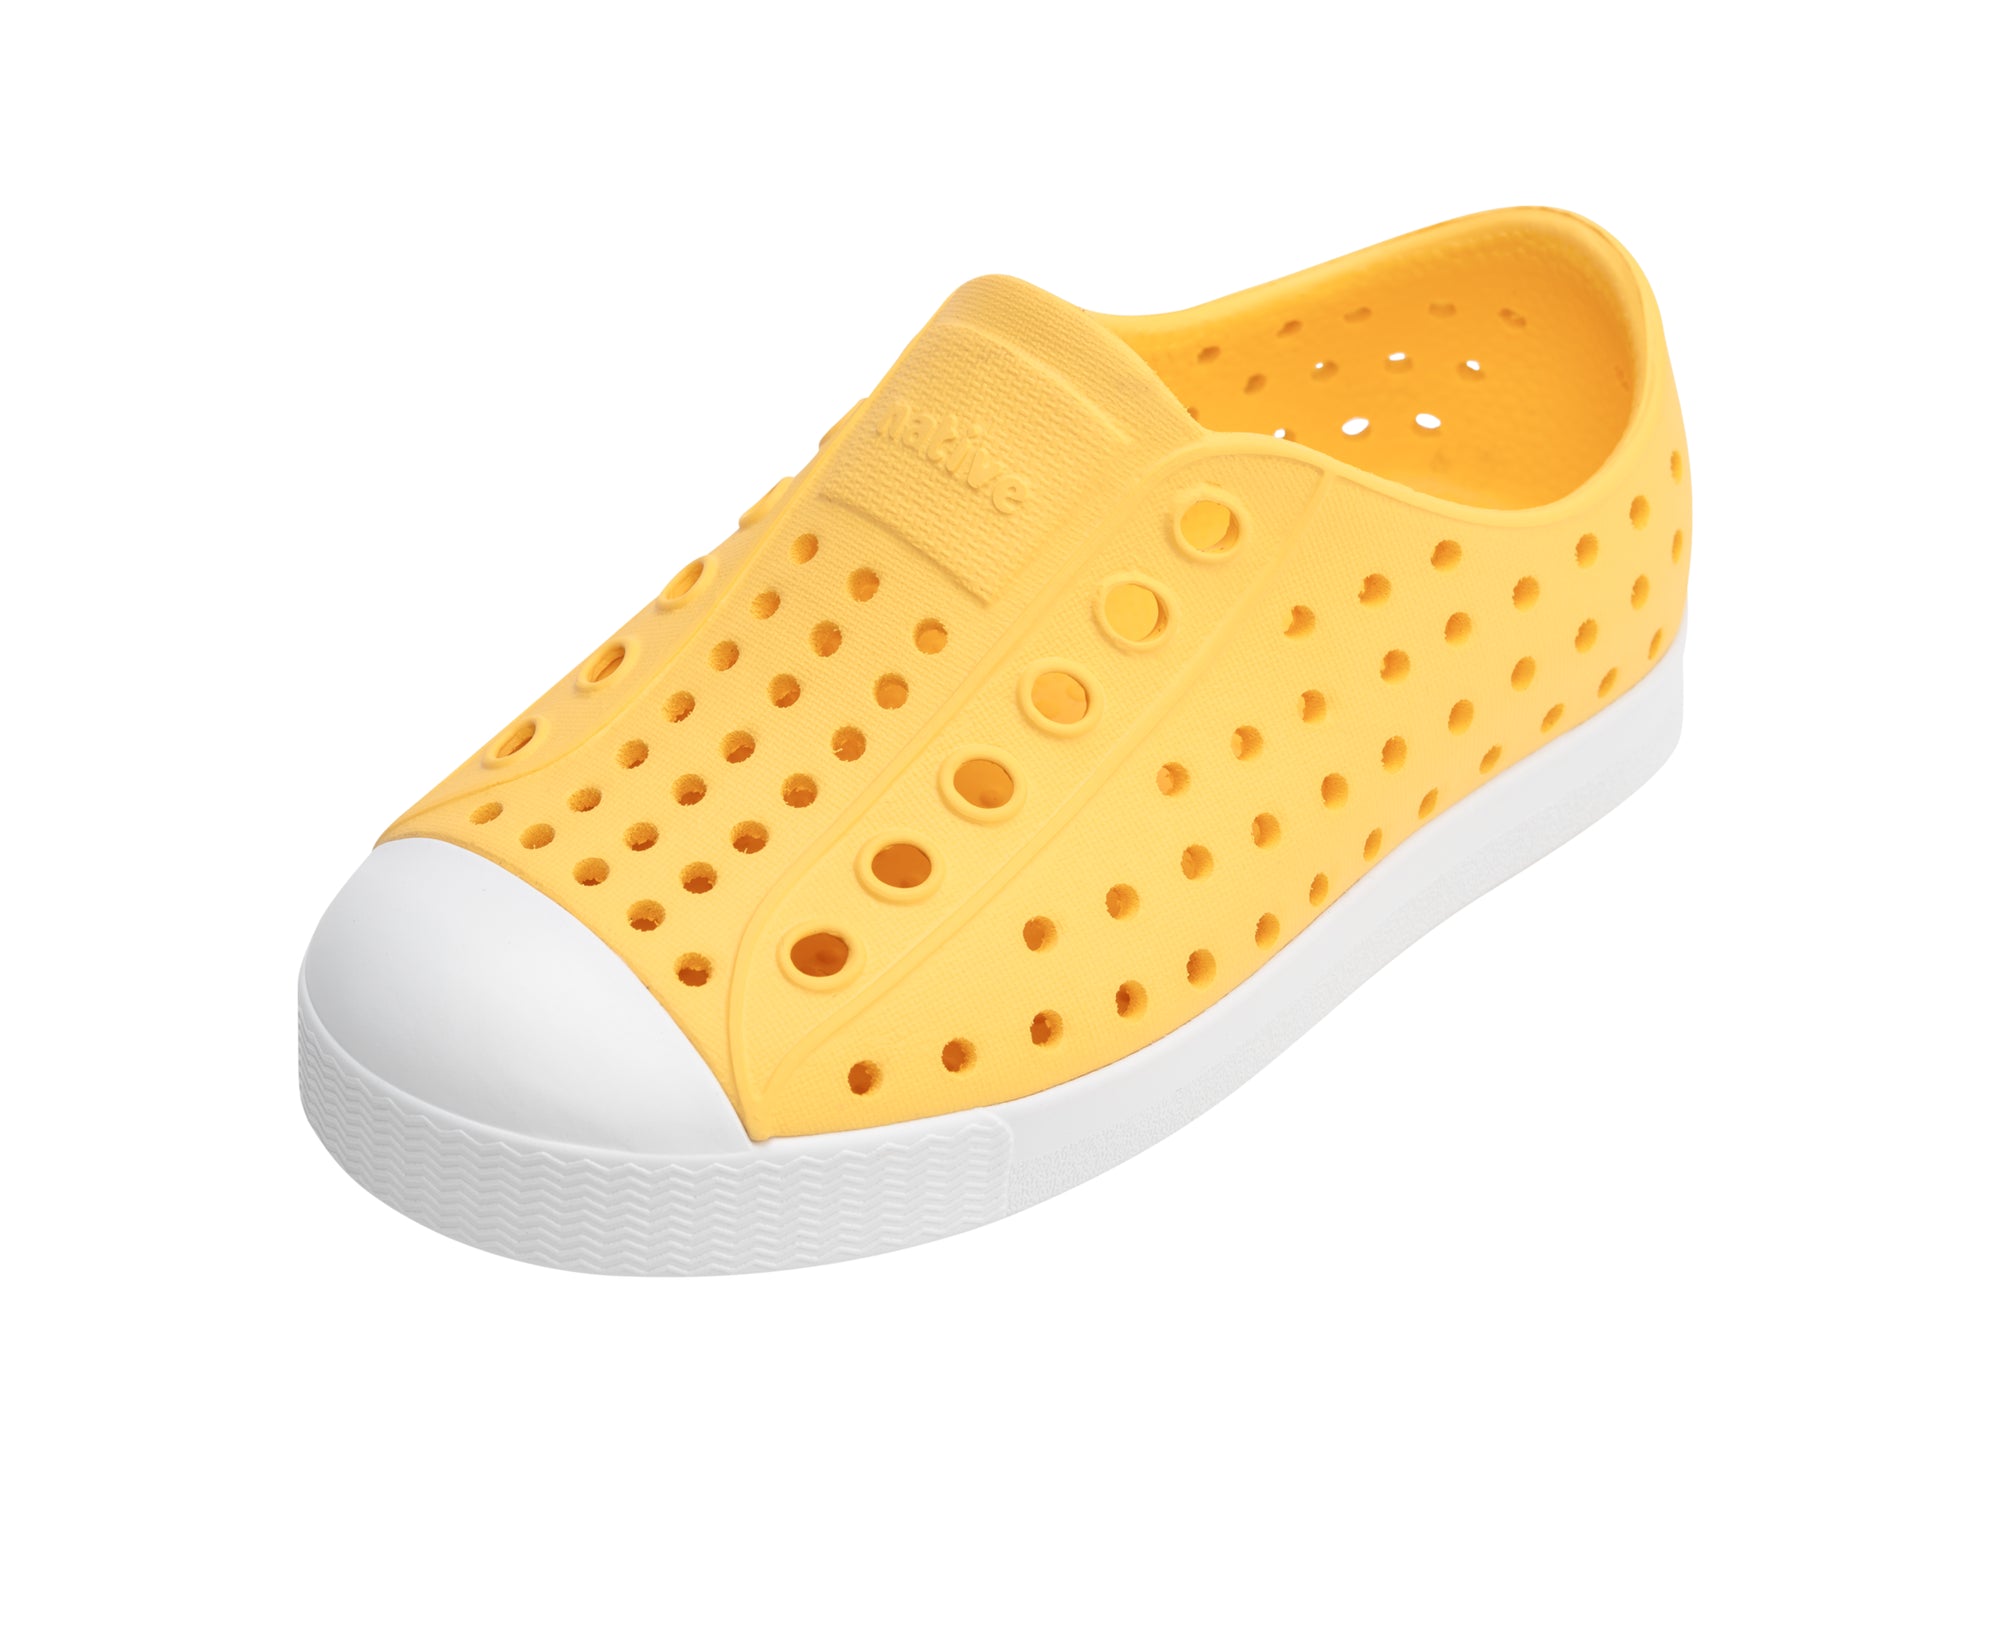 Native Shoes Shoes C4 - Crayon Yellow/Shell White Native Shoes Jefferson Child Shoe - Pineapple Yellow / Shell White 2